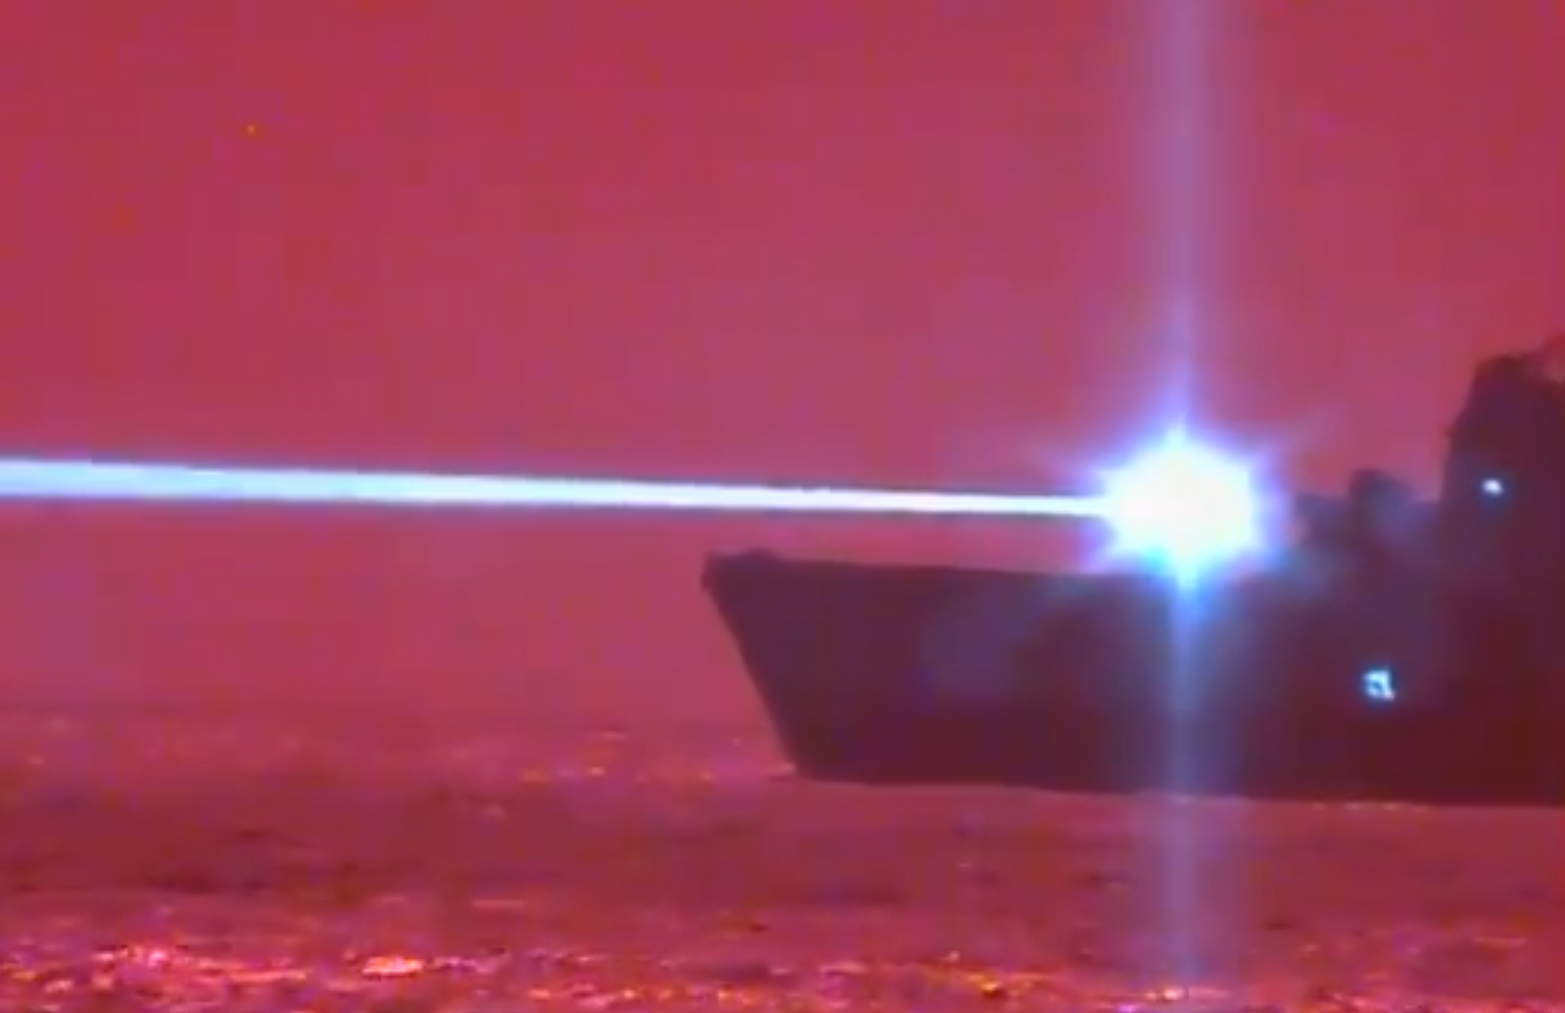 Sf兵器 レーザーを可視化した米海軍の動画がかっこいいの画像 1 3 ナゾロジー